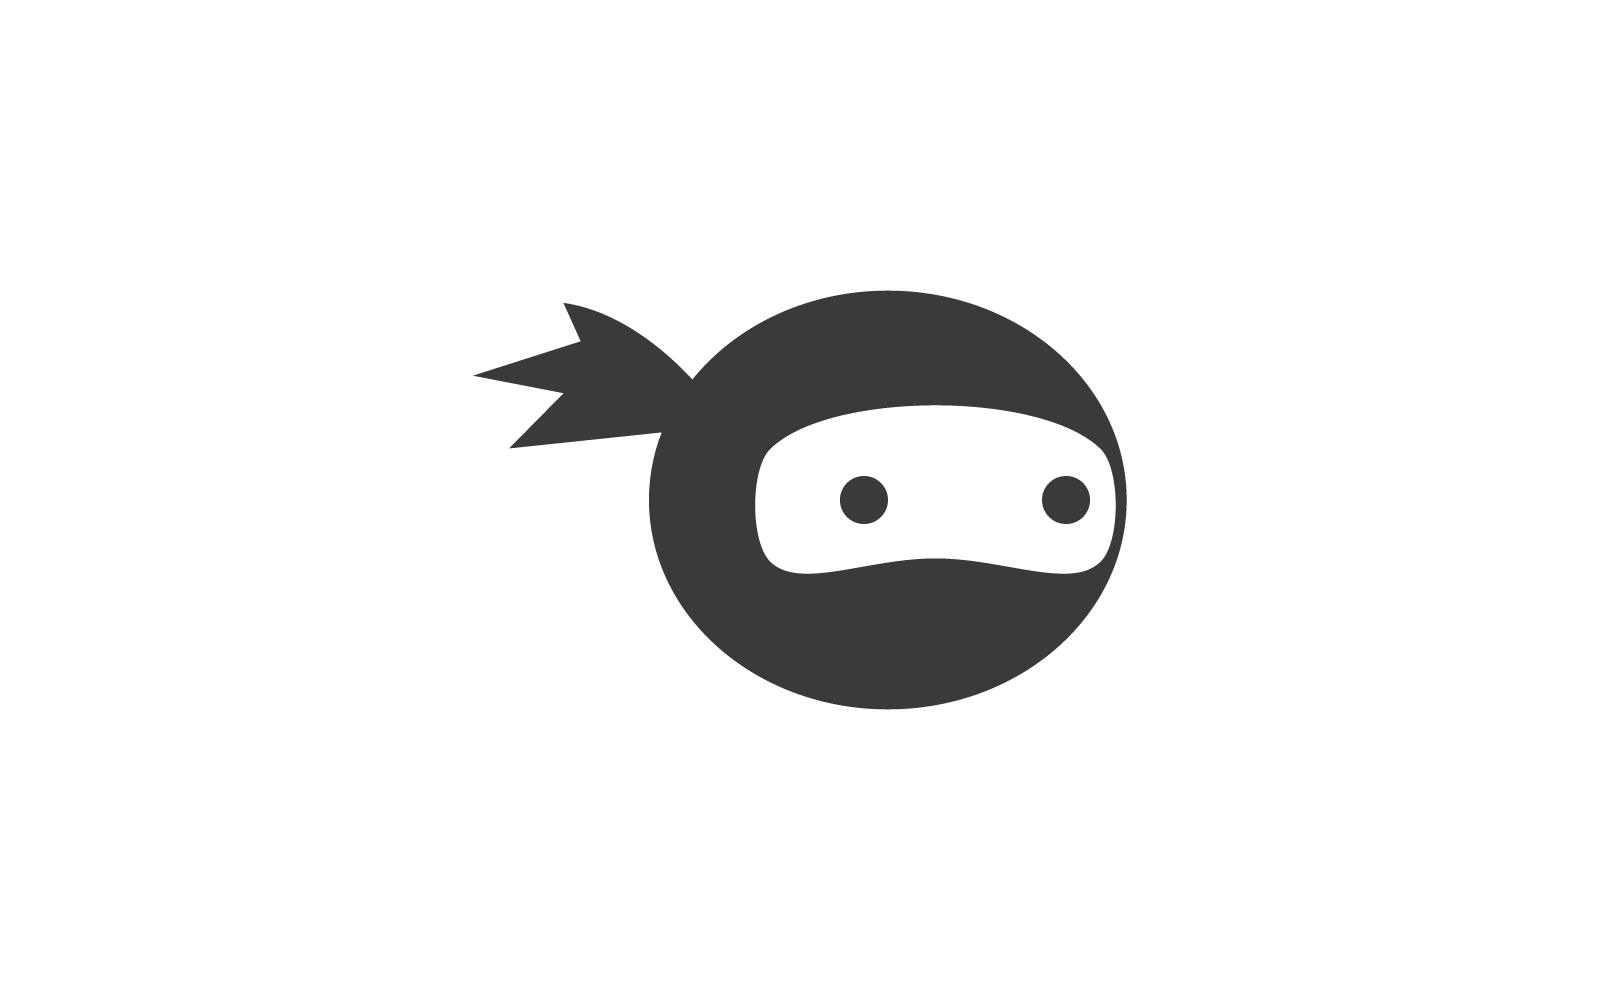 Ninja illustration logo vector design template